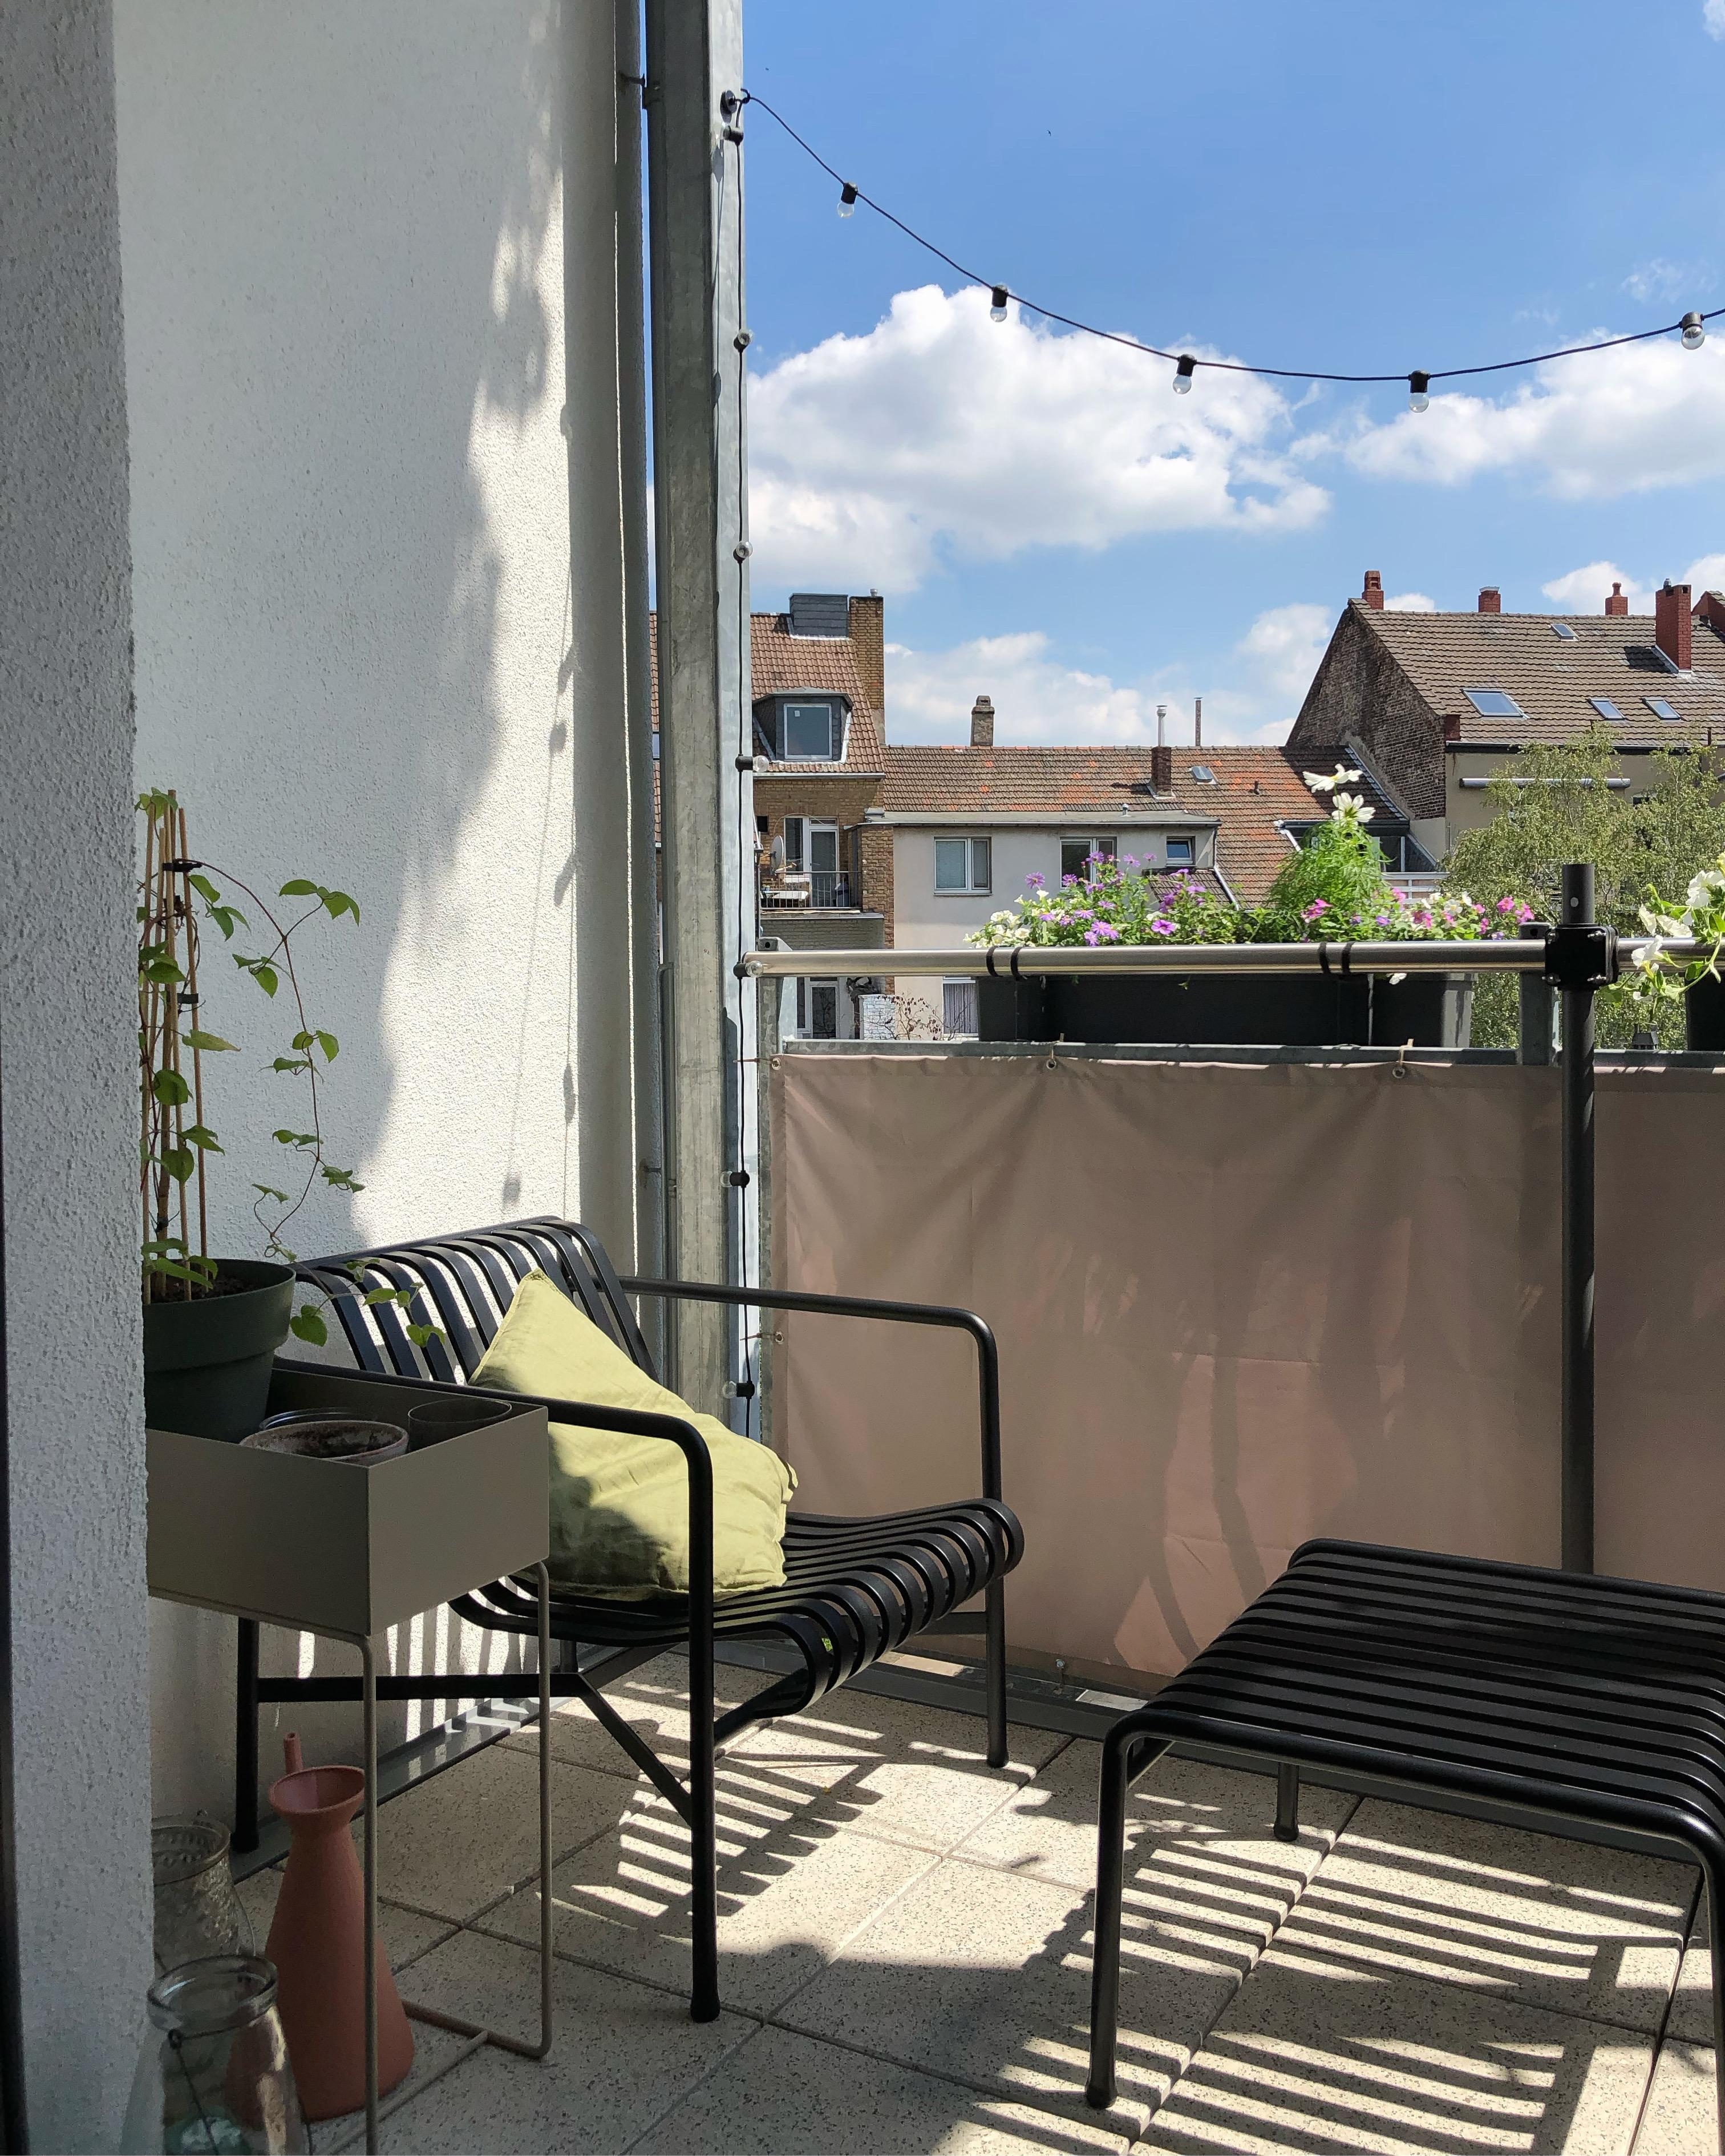 #balkon #balkonideen #balkoninspo #balkondeko #outdoor #balcony #home #homeinspiration #pflanzen #blumen #couchstyle